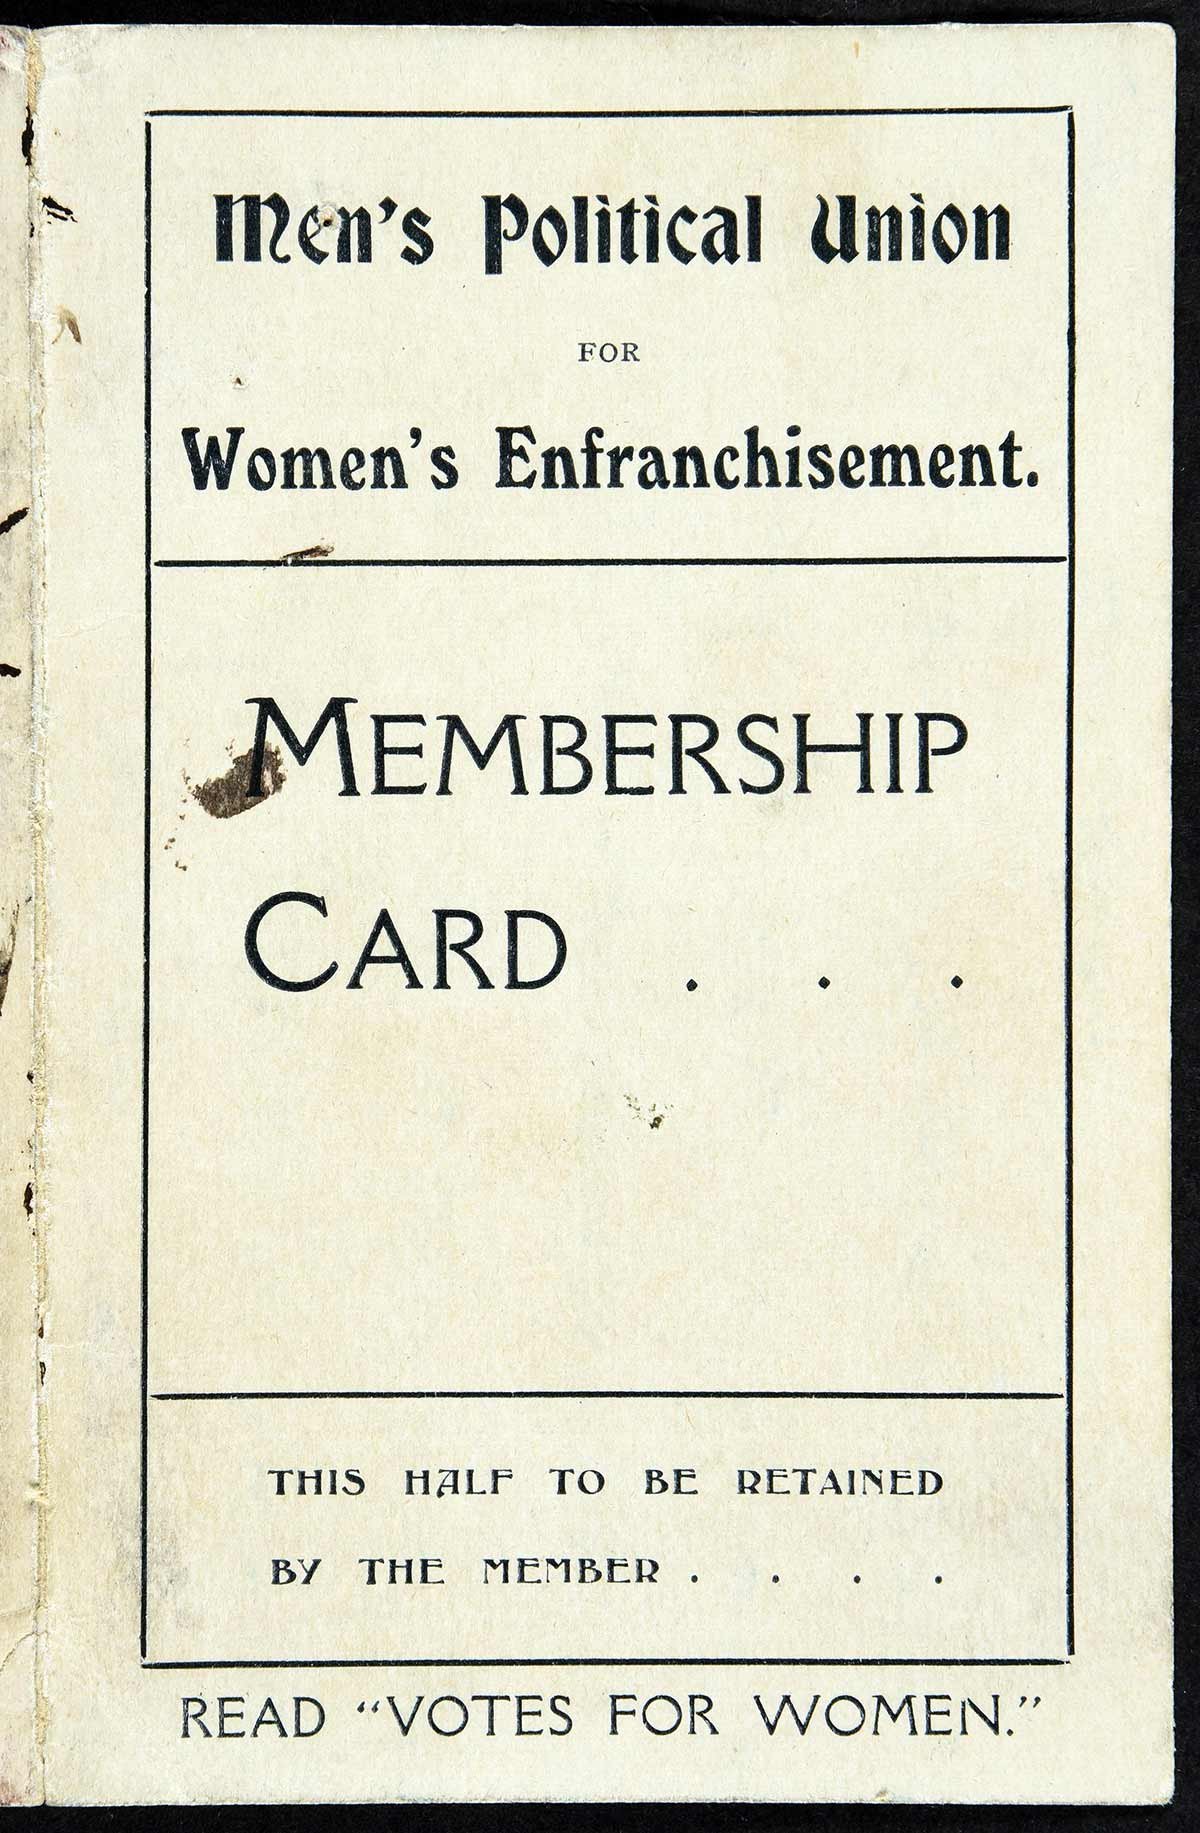 A membership card for the Men's Political Union for Women's Enfranchisement.